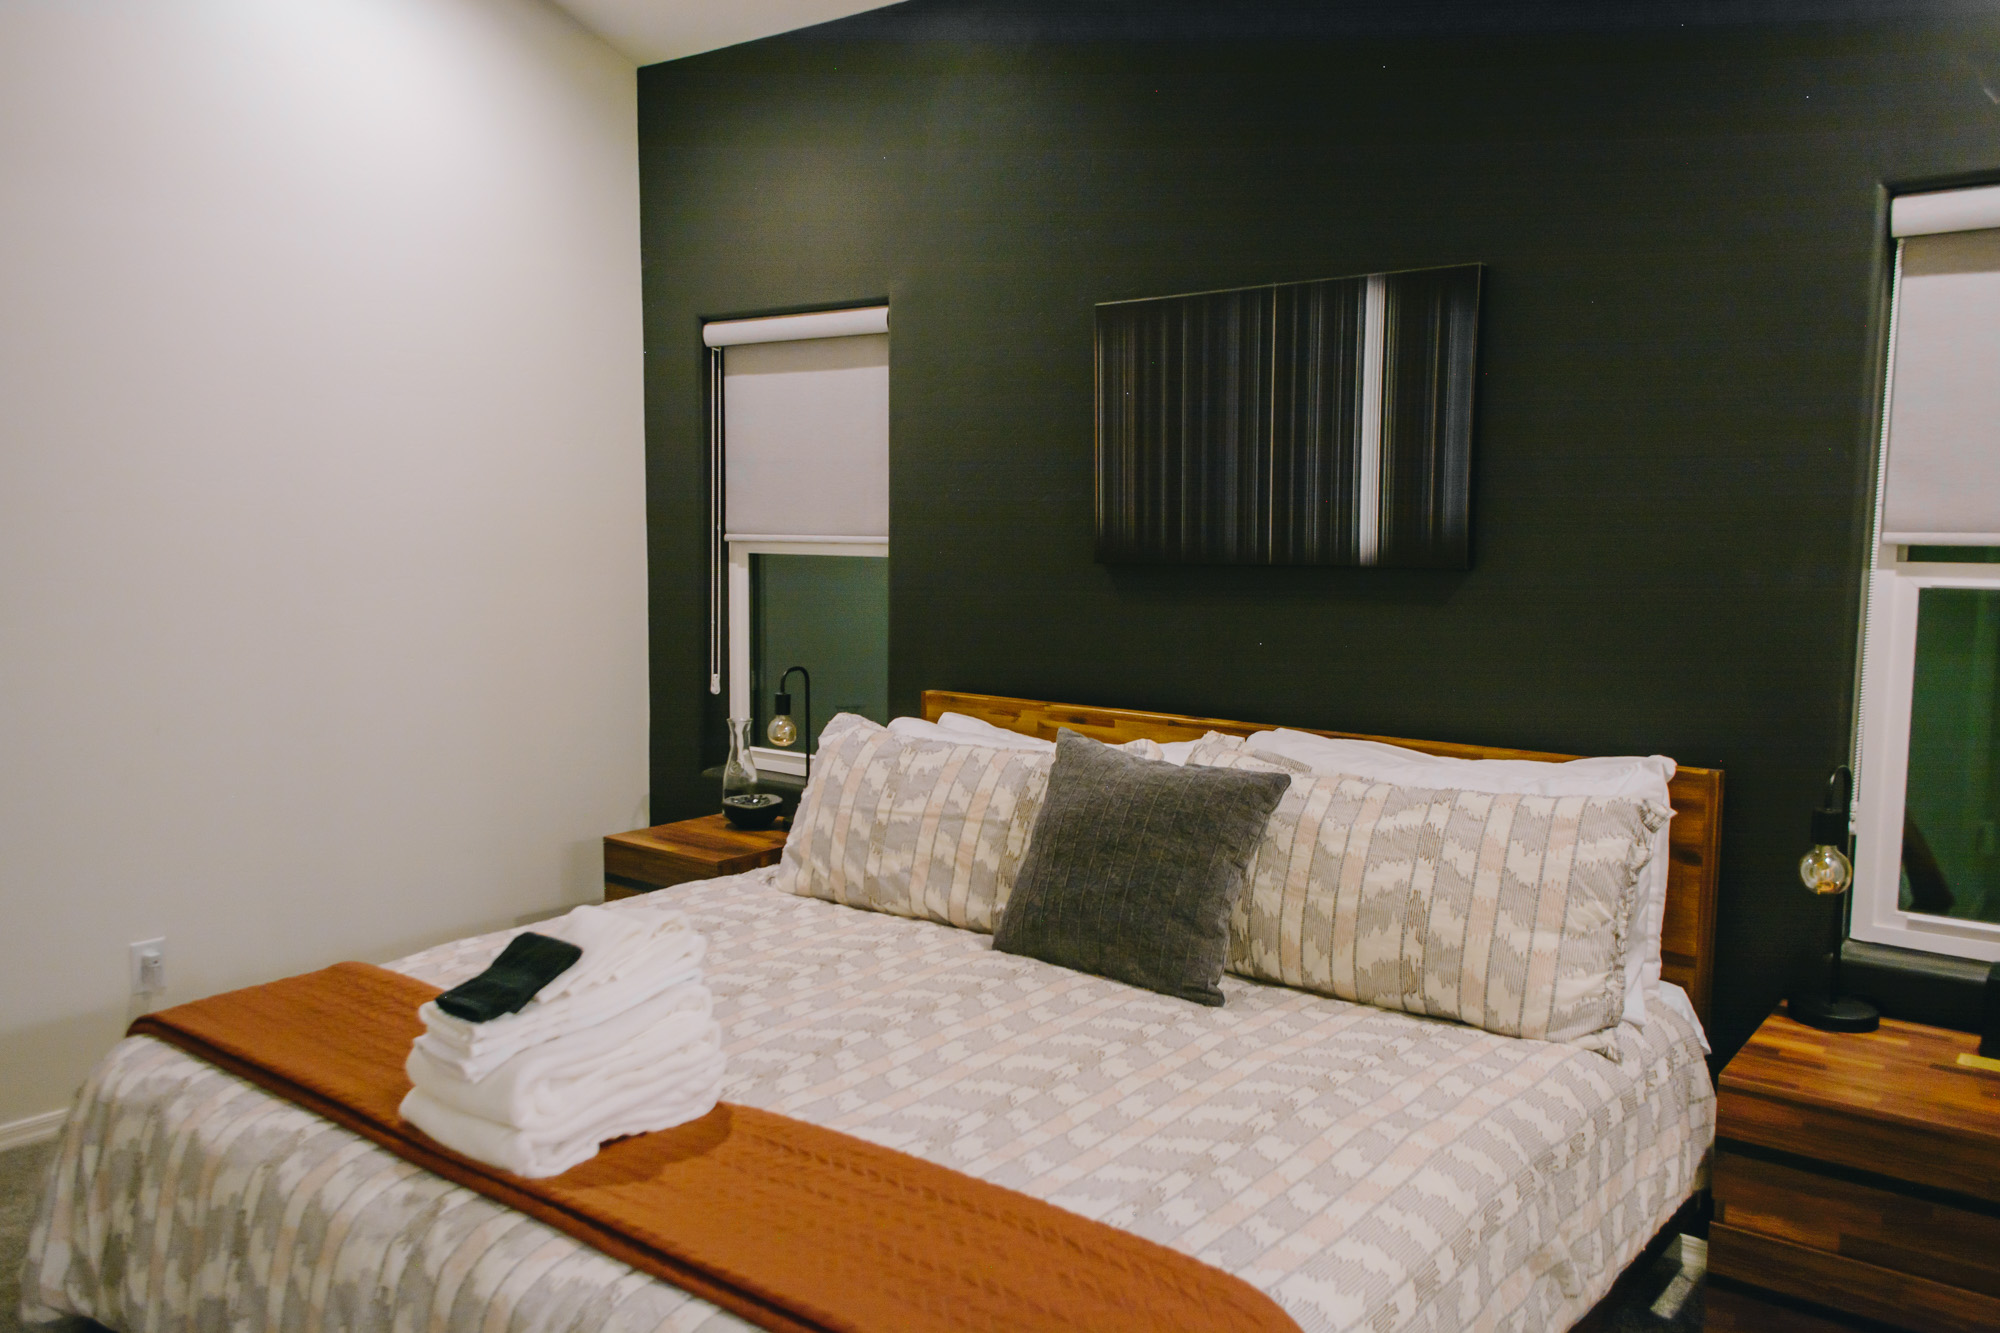 Arizona influencer Demi Bang shares a Modern Airbnb cabin in Pine, Arizona